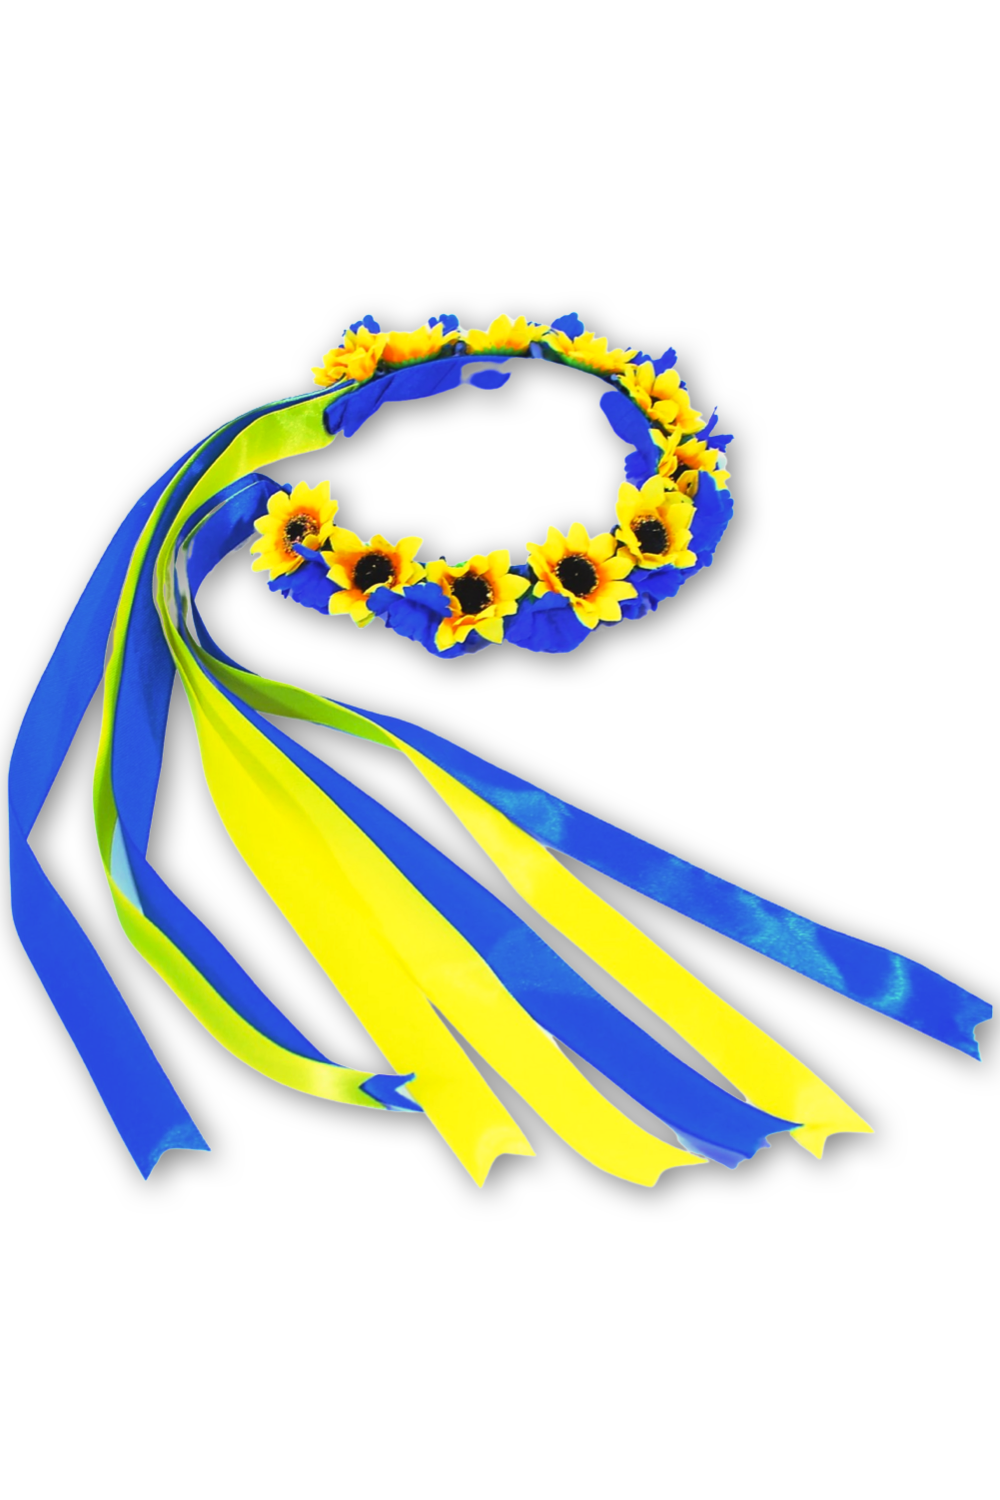 Headband "Vinok" with ribbons. Patriotic